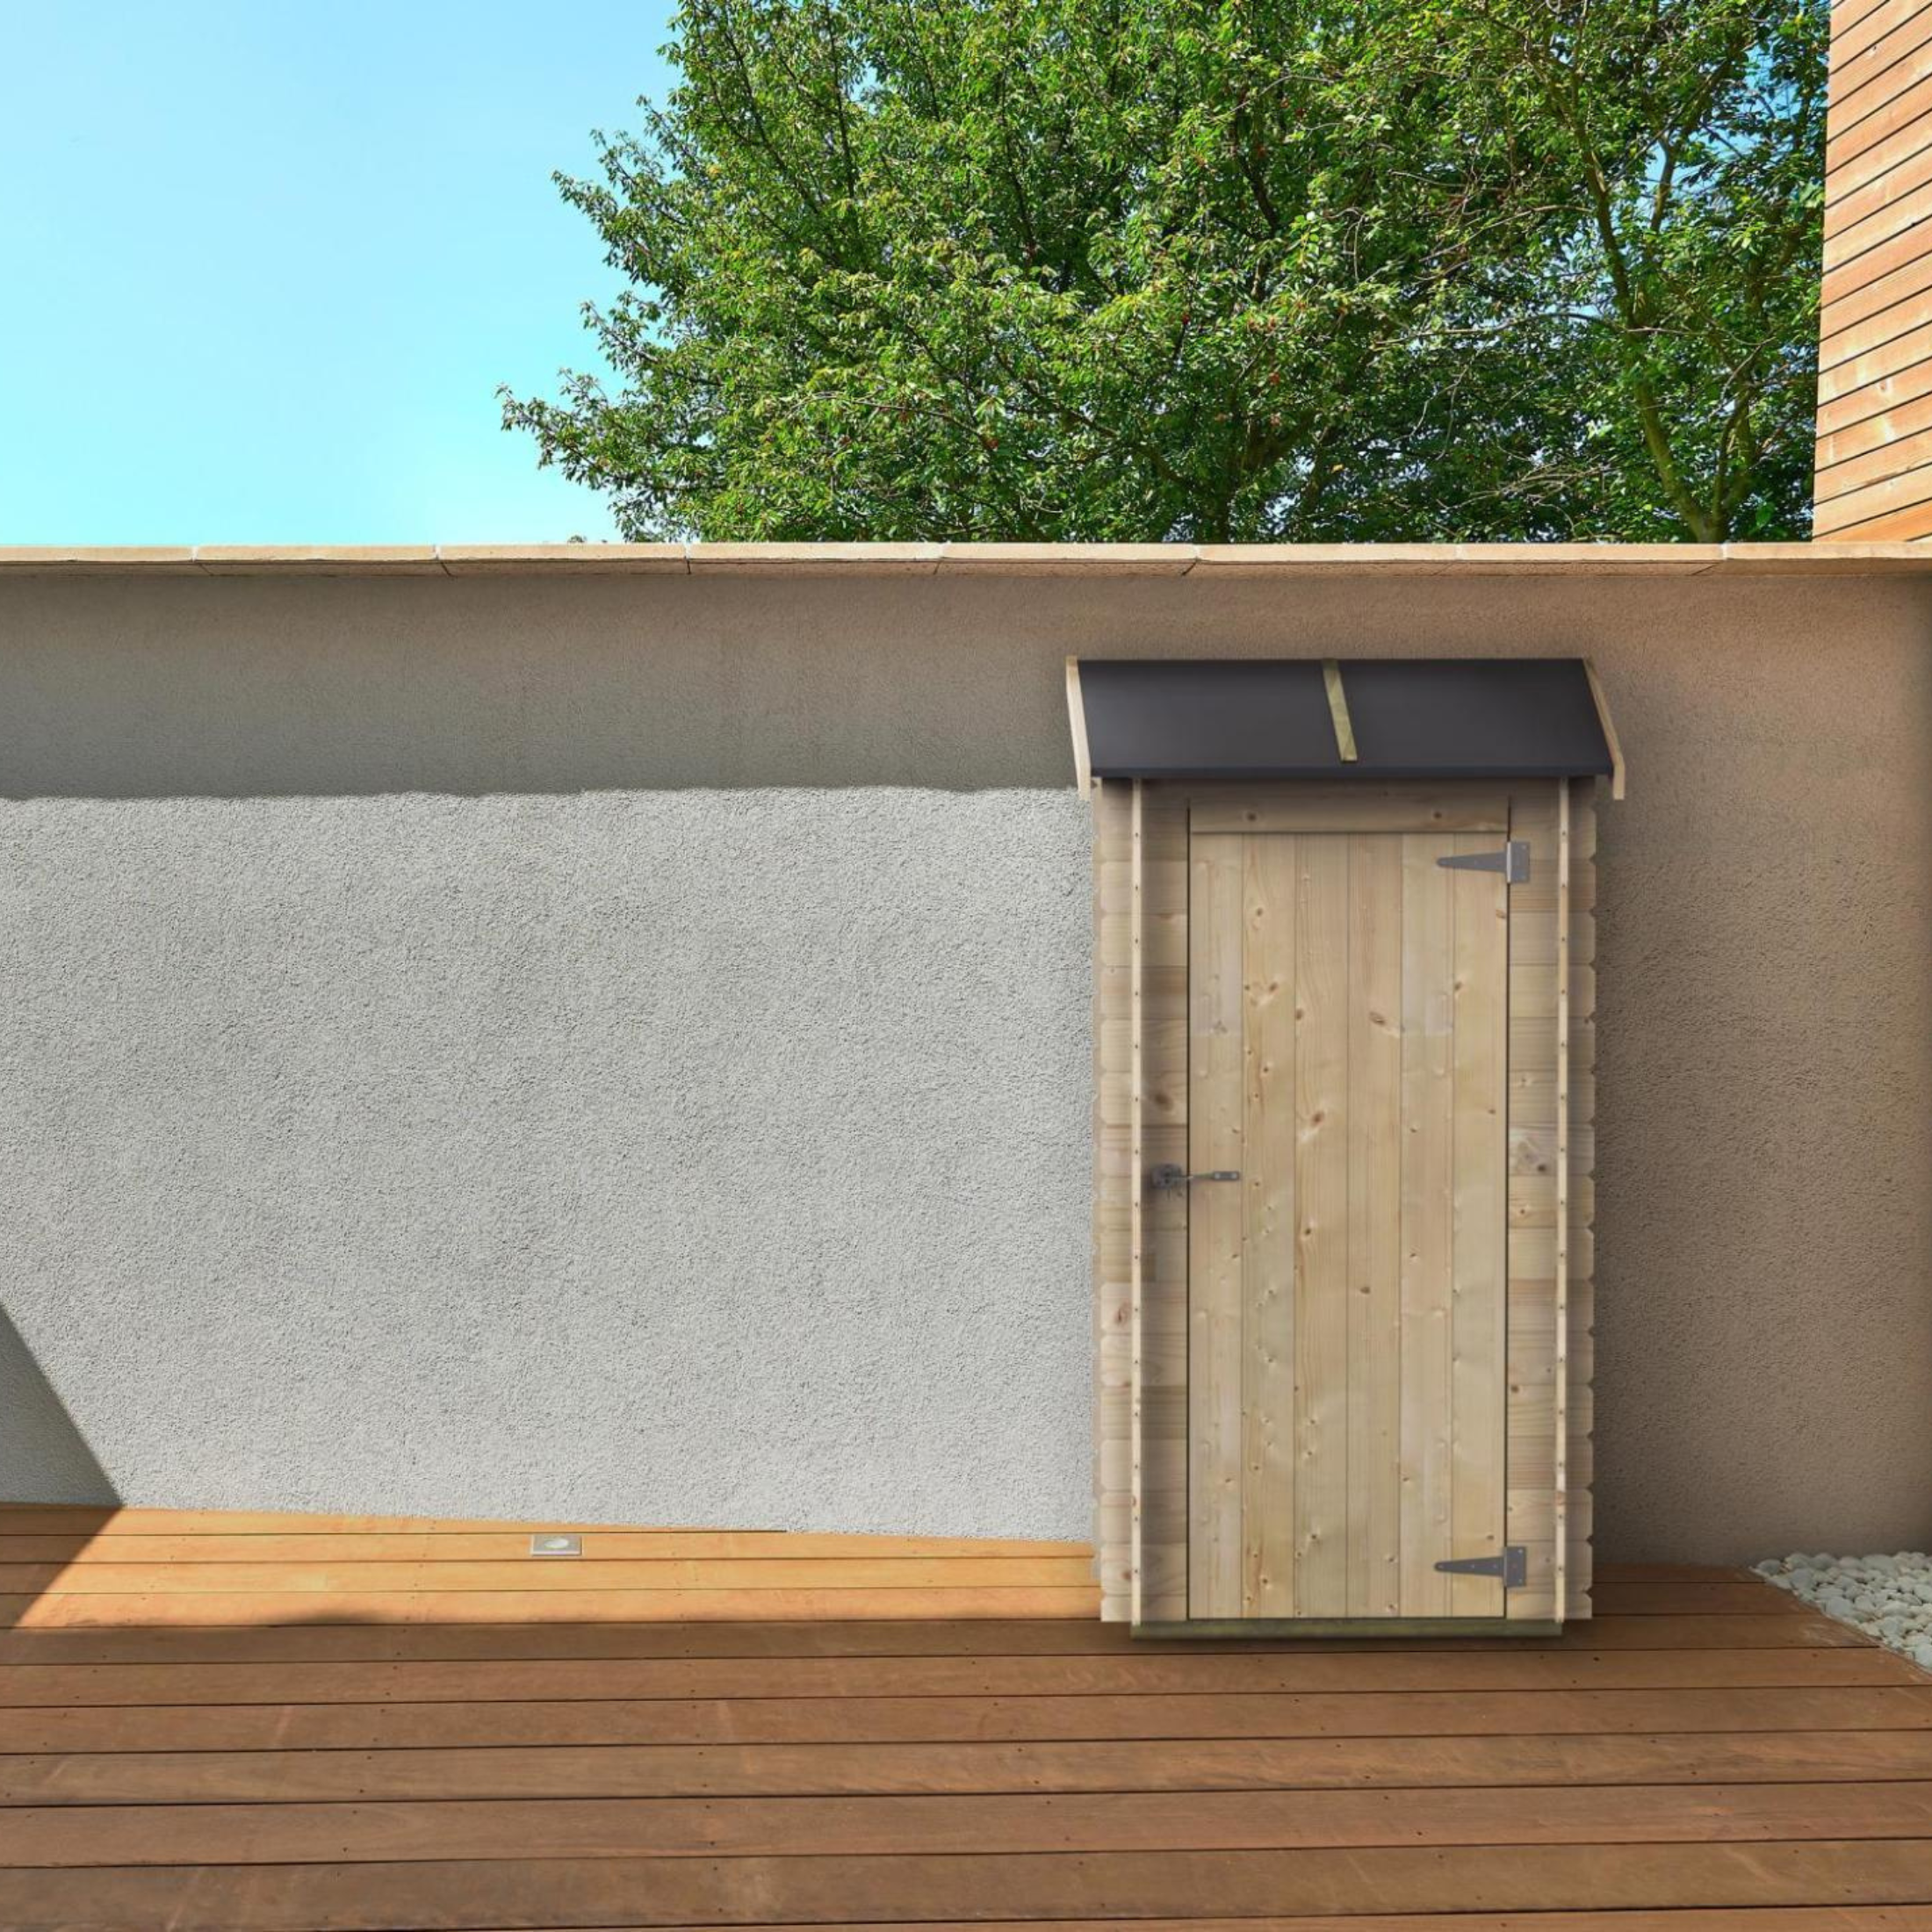 Caseta de jardín de madera "Arturo Addossata" puerta batiente simple 98x64 cm 188h